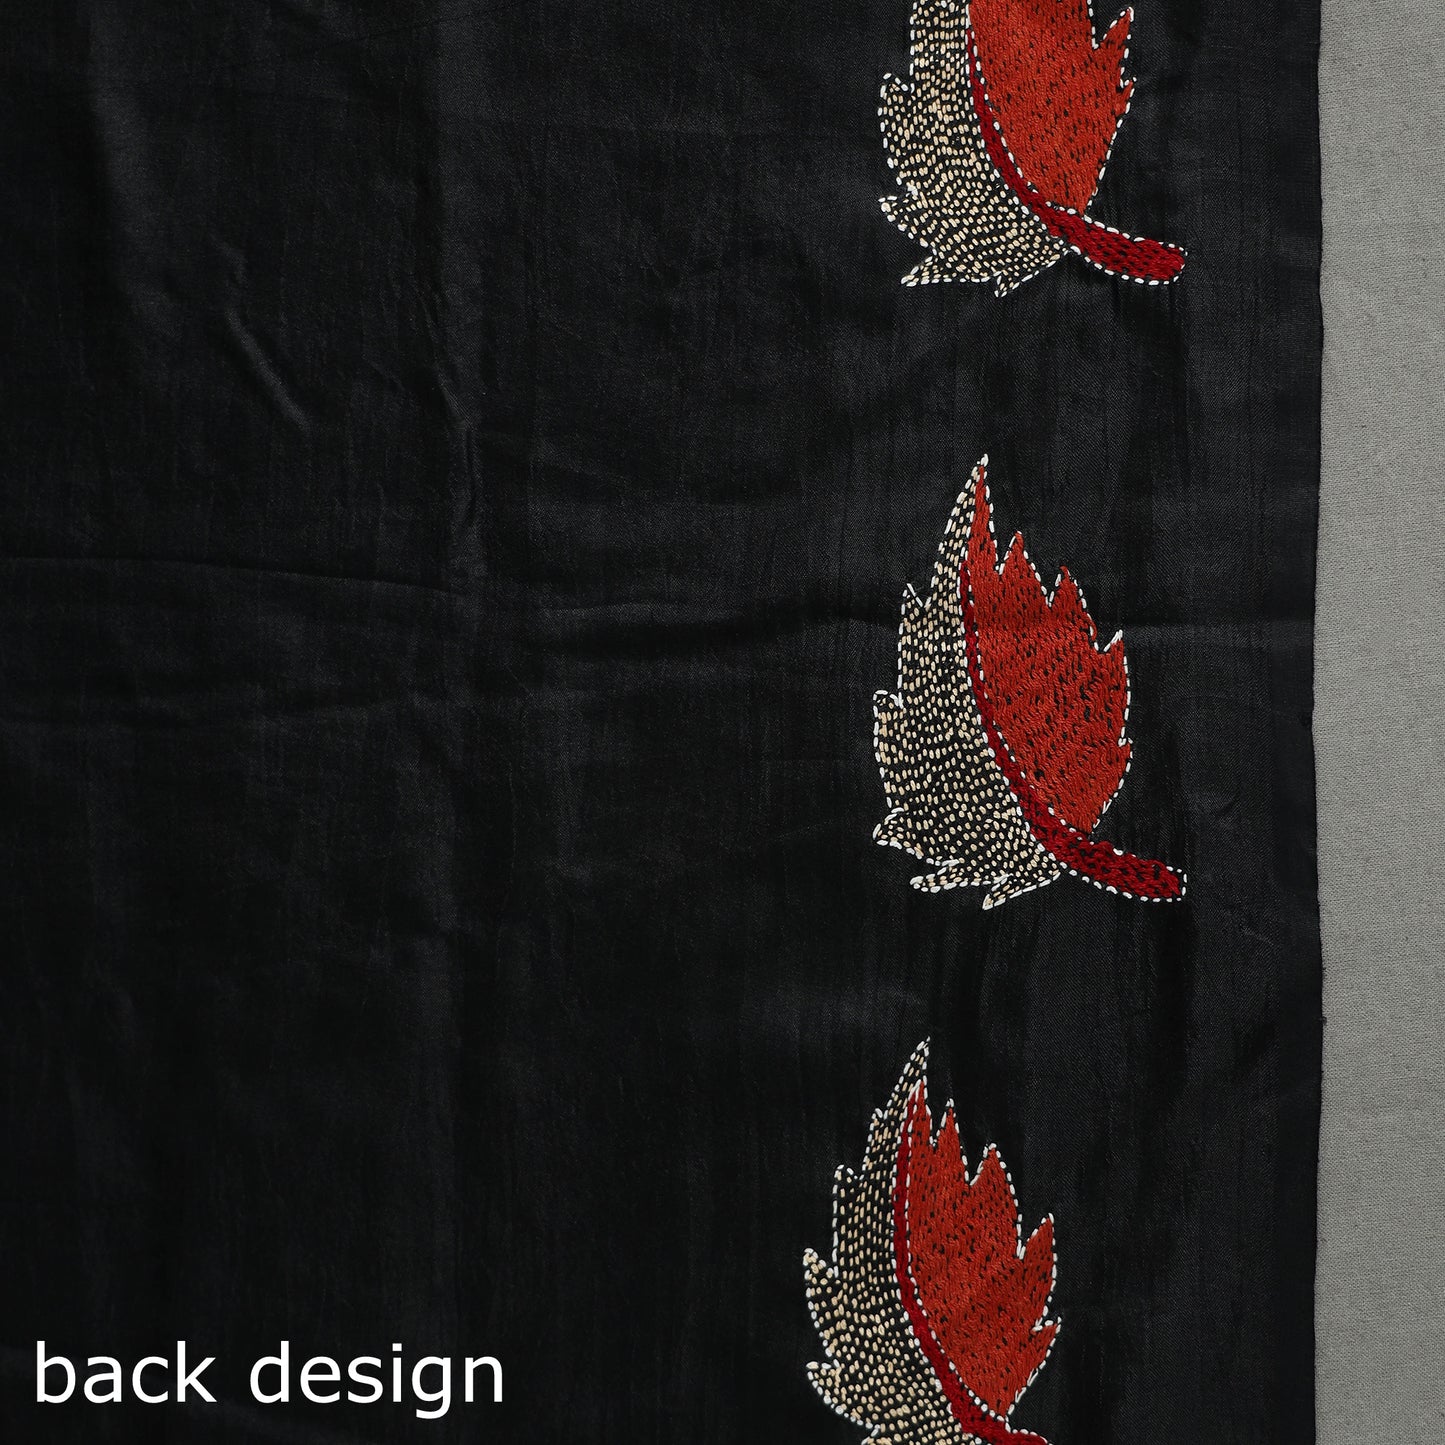 Black - Black - Bengal Kantha Embroidery Handloom Banarasi Silk Saree